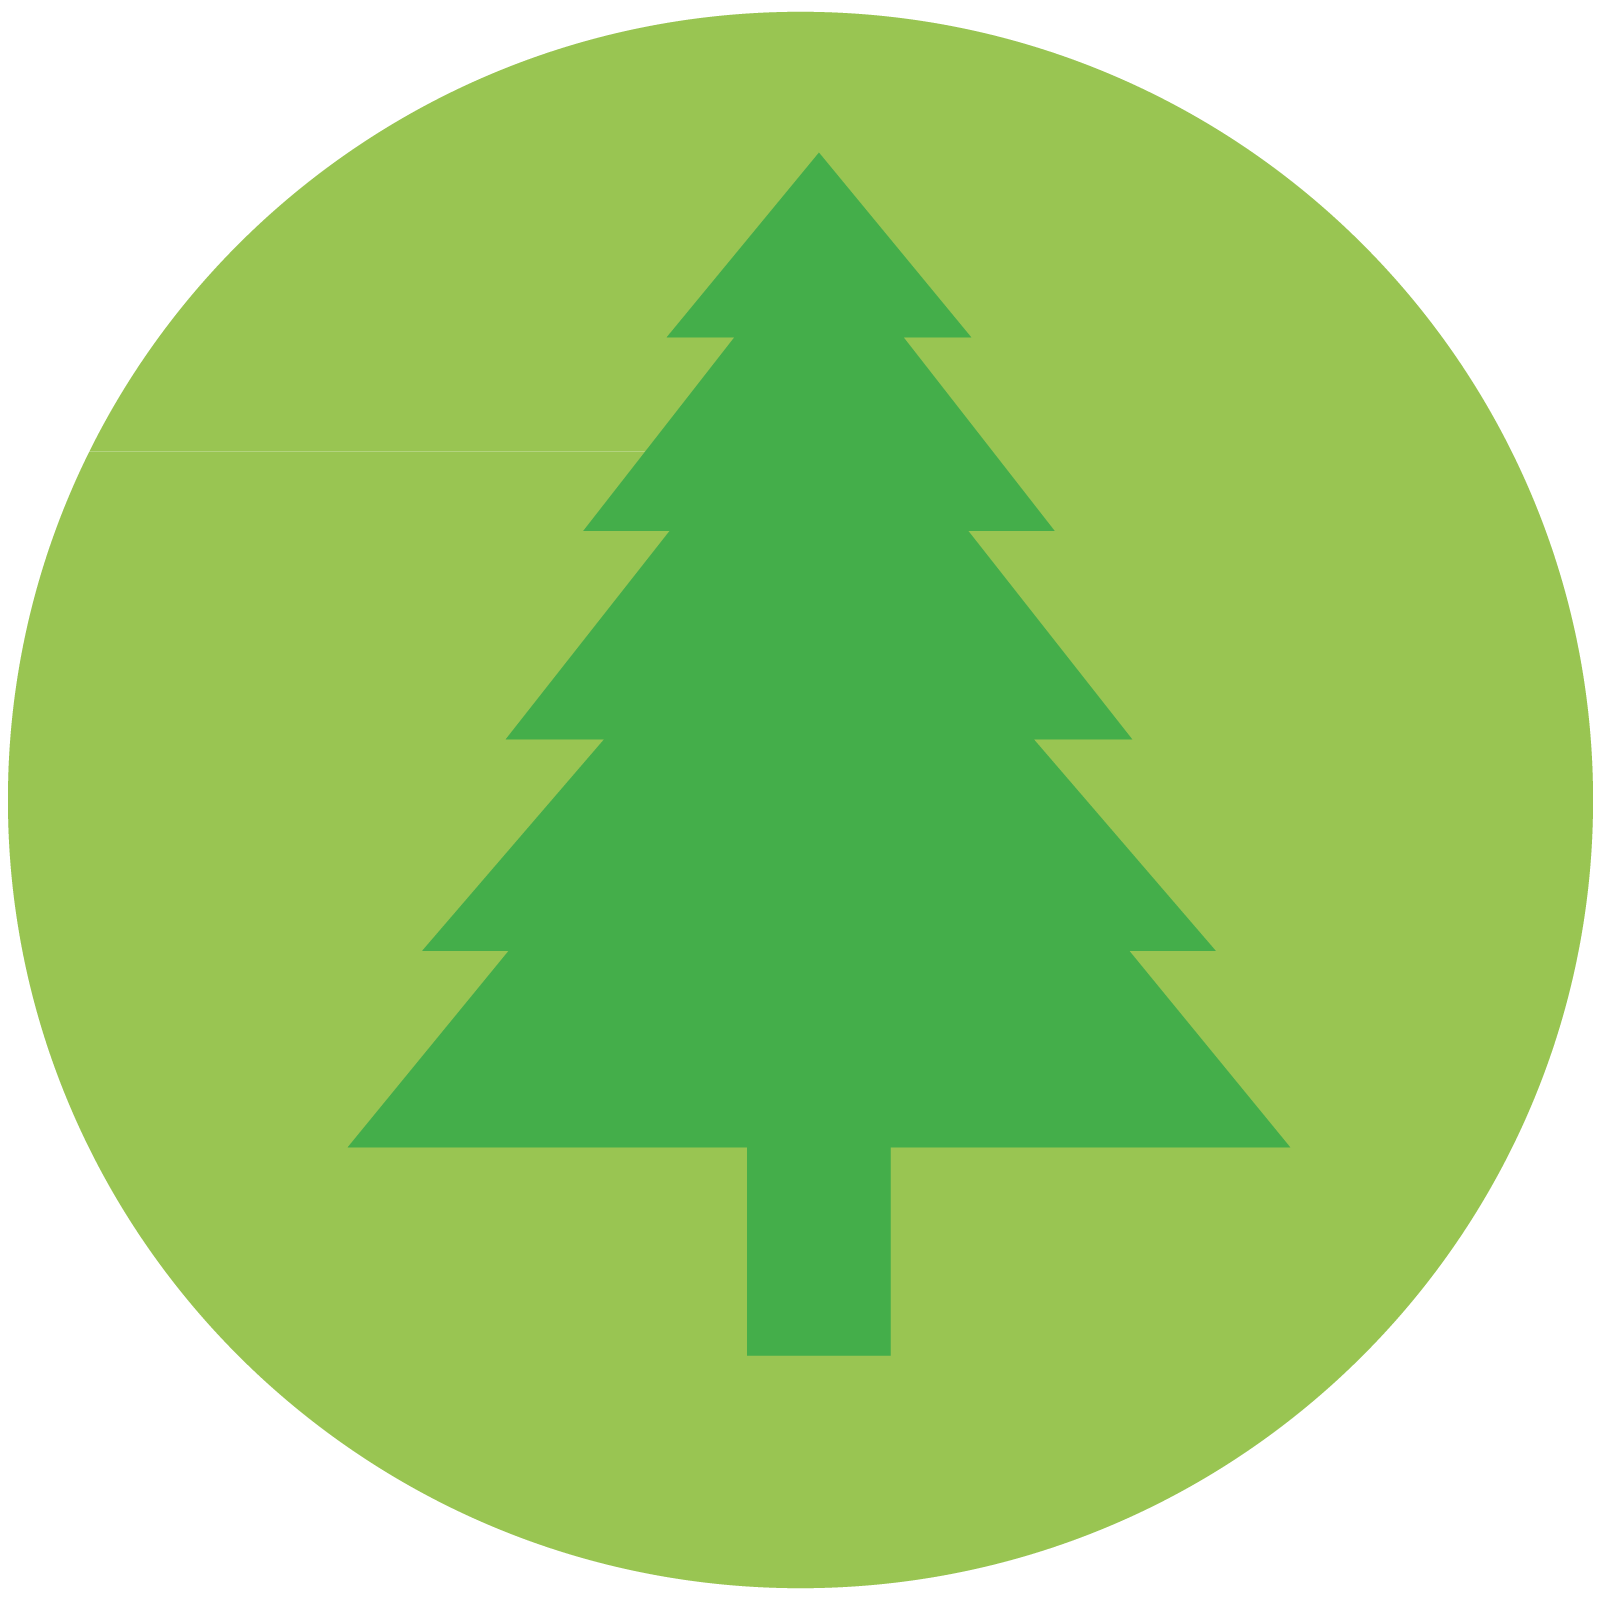 Green,Christmas tree,Tree,Leaf,oregon pine,Christmas decoration,Colorado spruce,Conifer,Pine,Plant,Pine family,Fir,Evergreen,White pine,American larch,Interior design